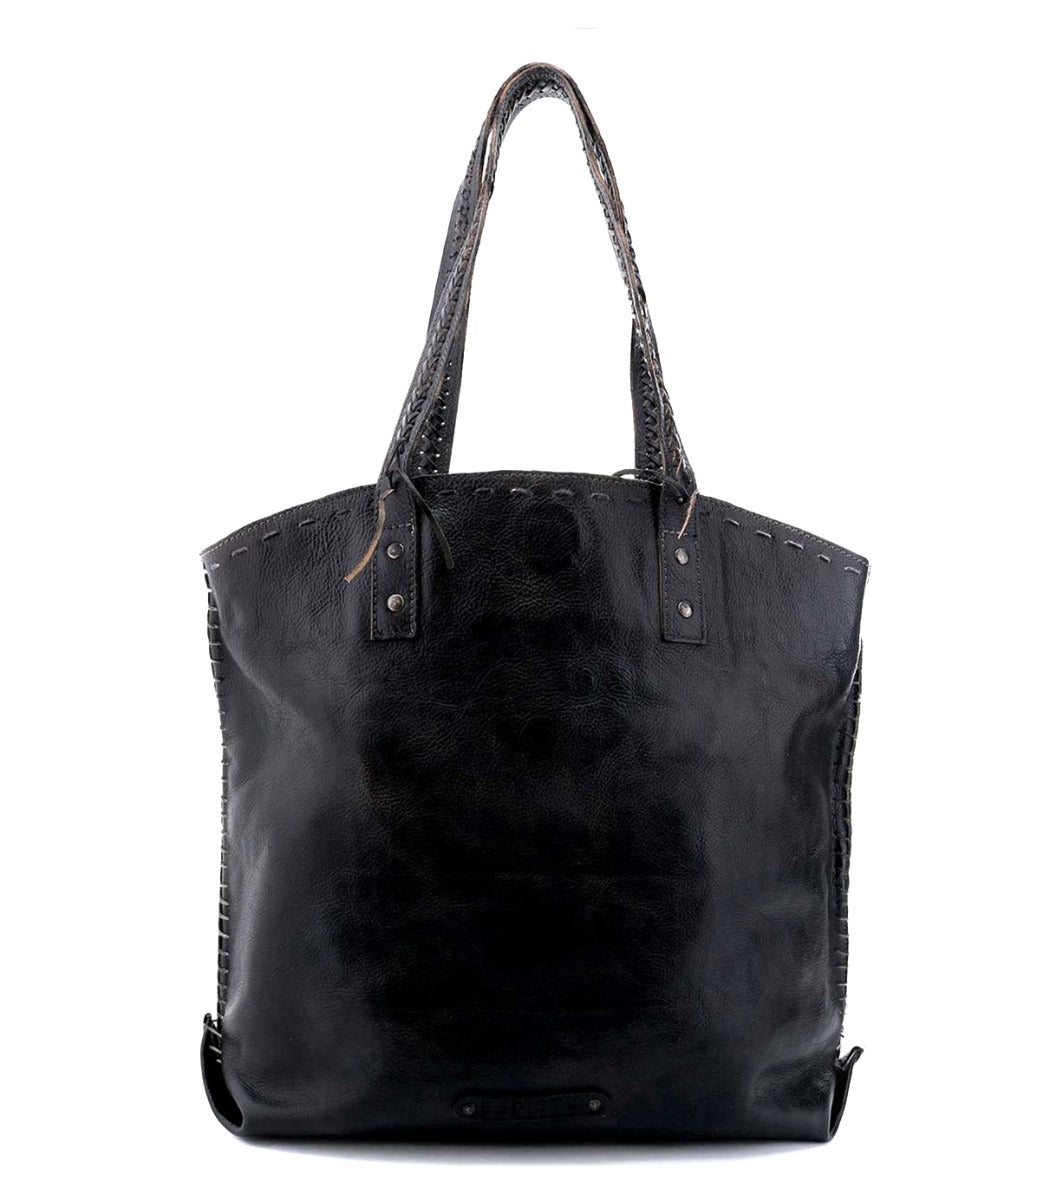 A black leather Barra tote bag by Bed Stu.